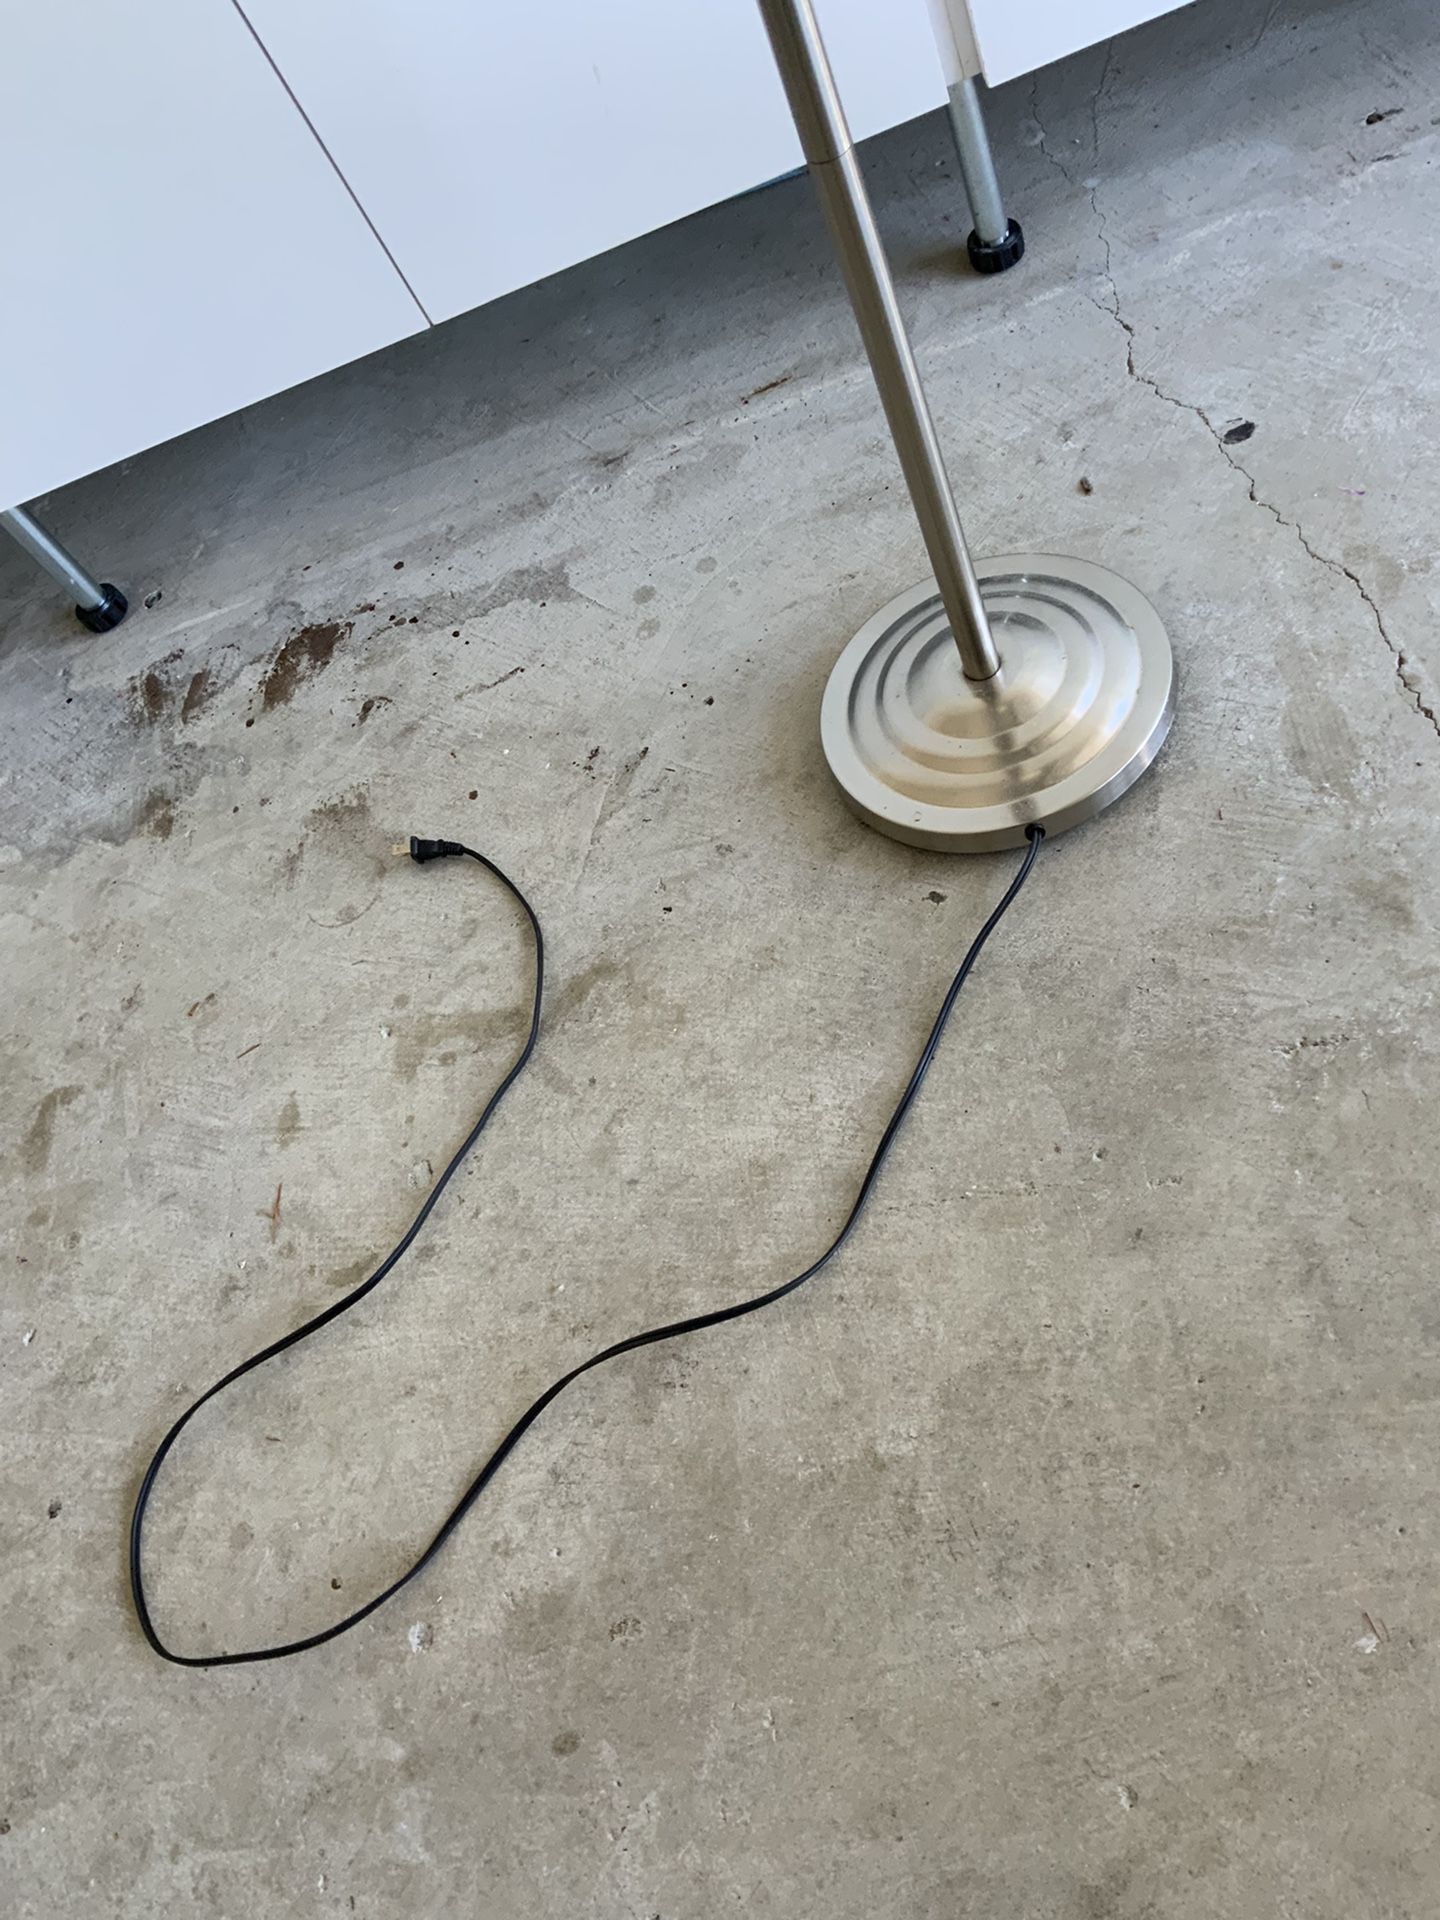 Standing Floor Lamp In Great Condition For $10